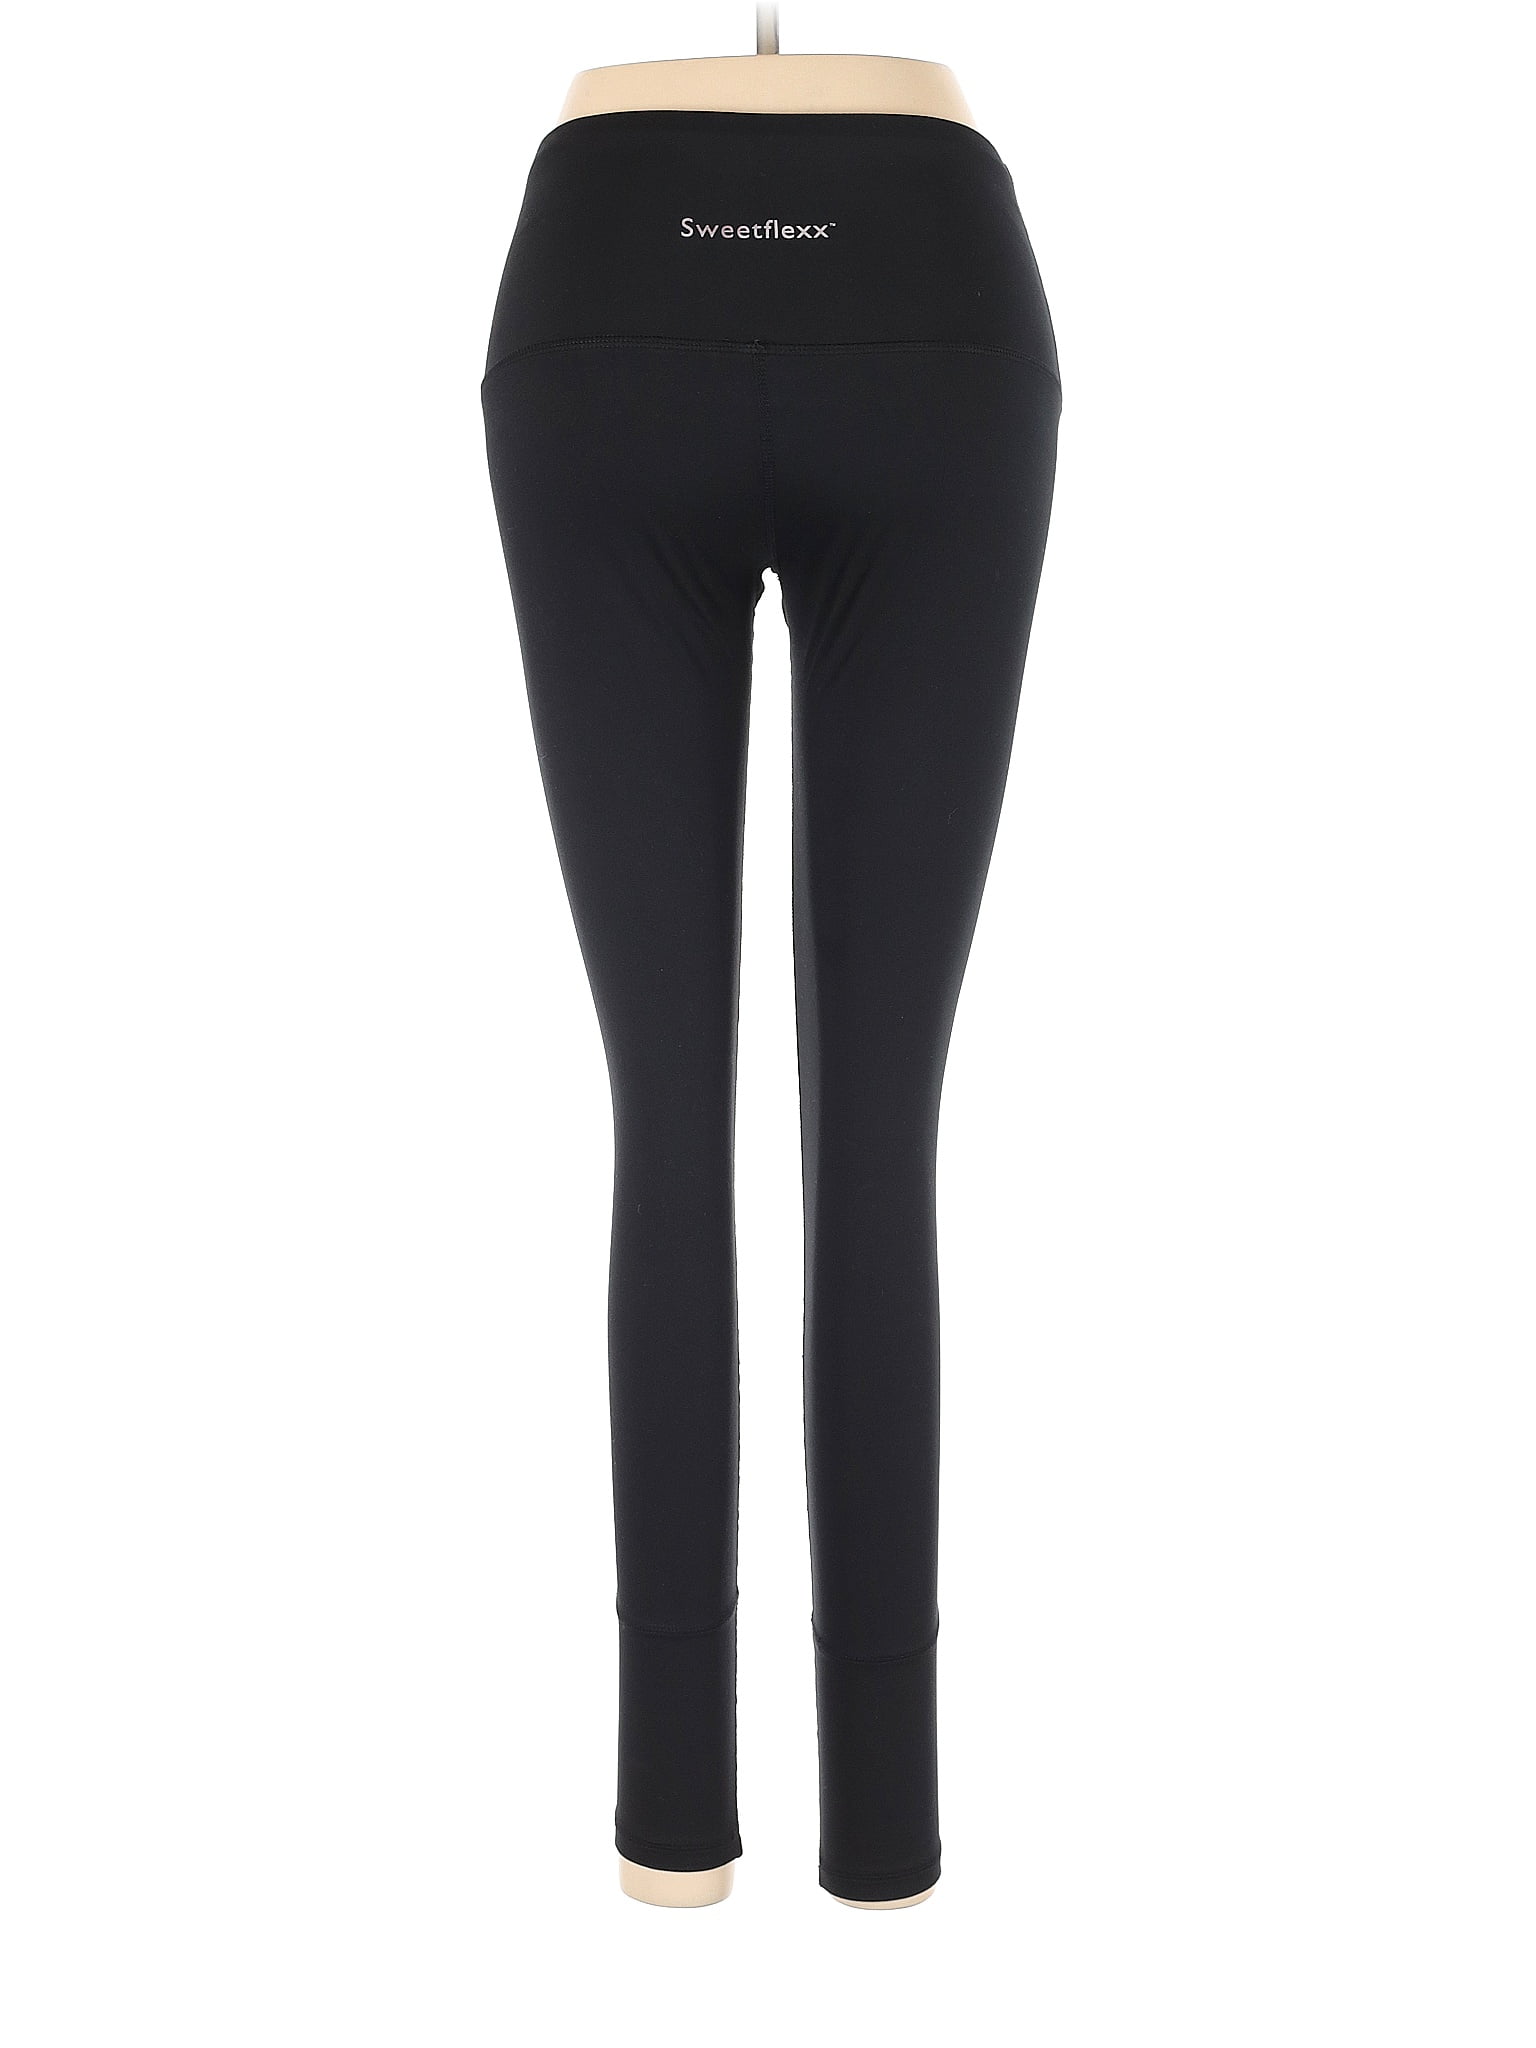 Sweetflexx Black Yoga Pants Size 8 - 70% off